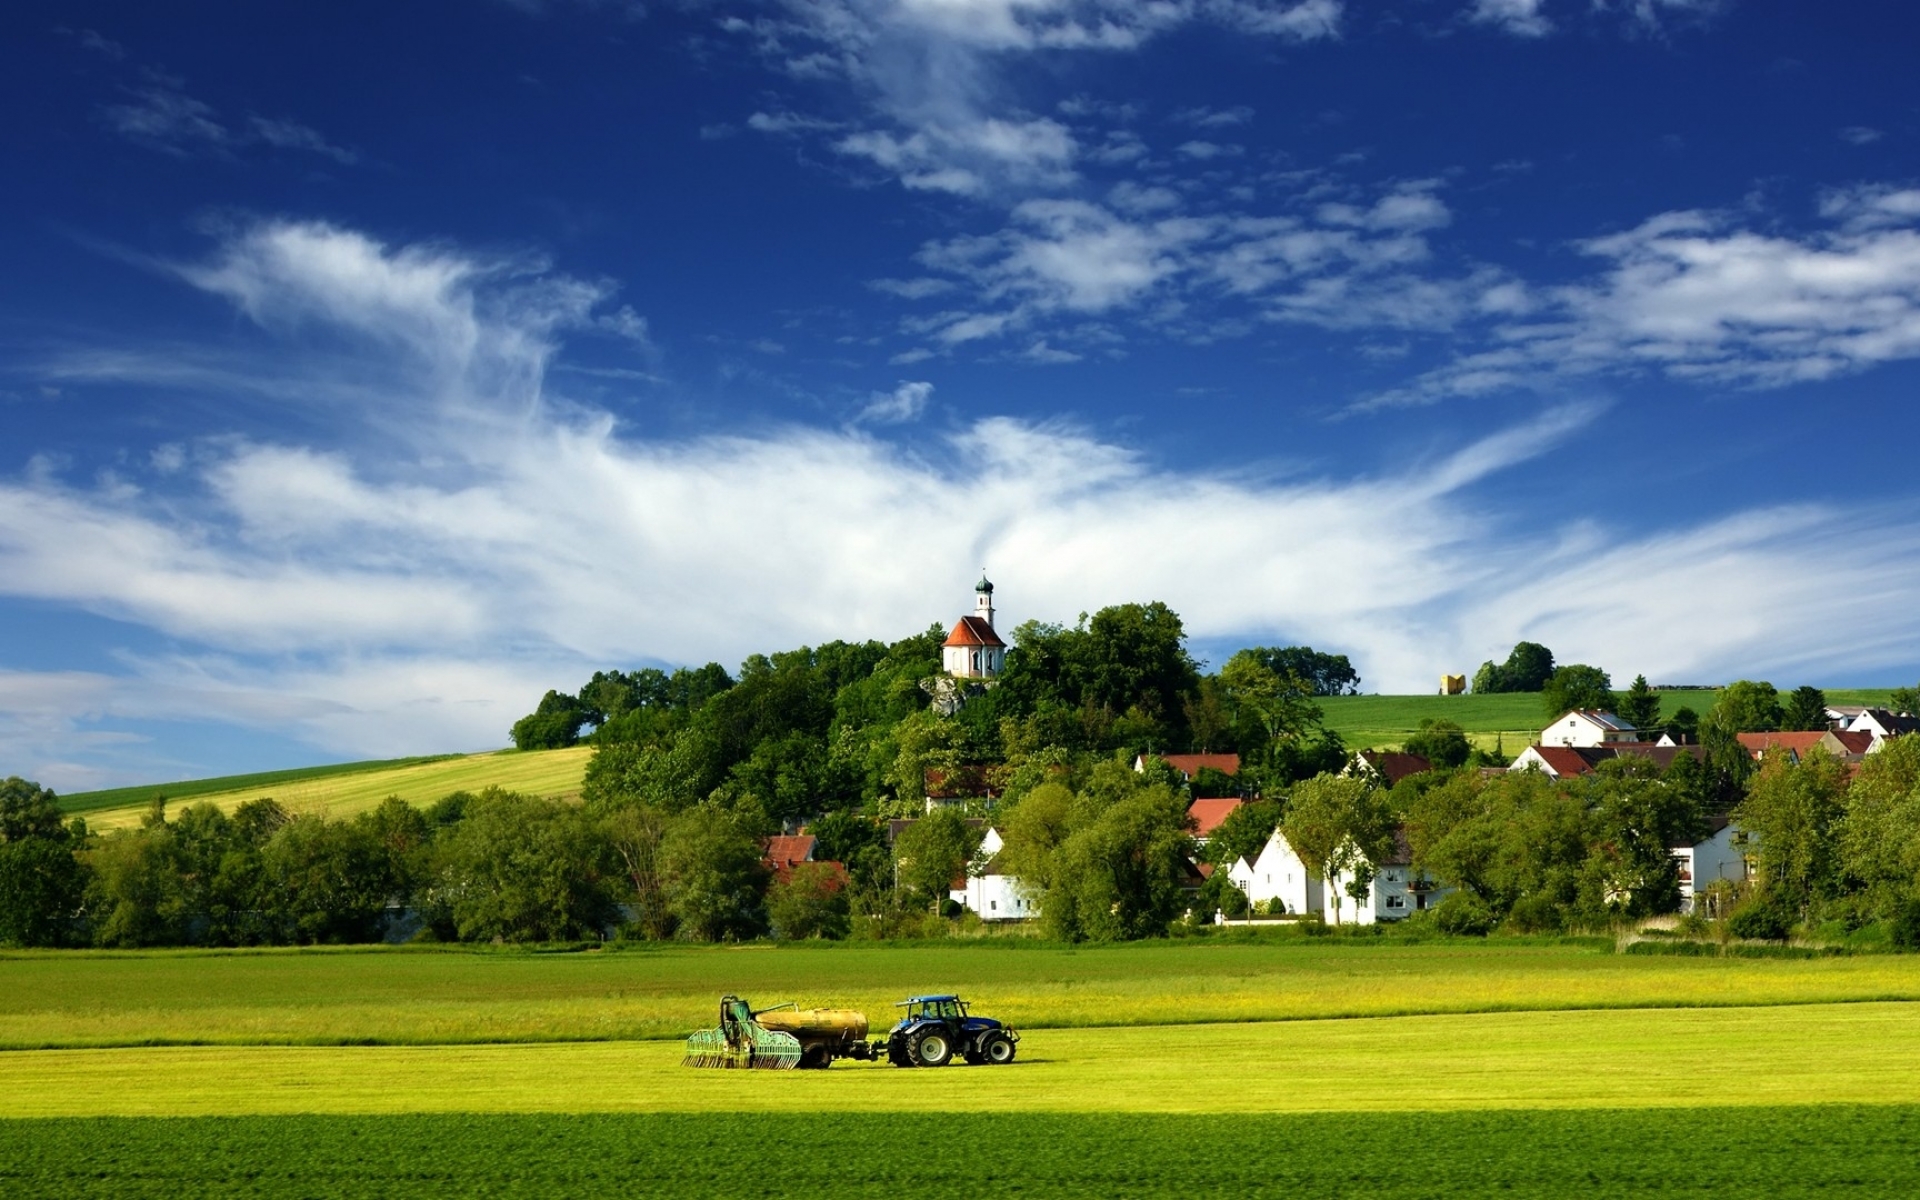 Tractor Village And Farm Country Desktop Wallpaper